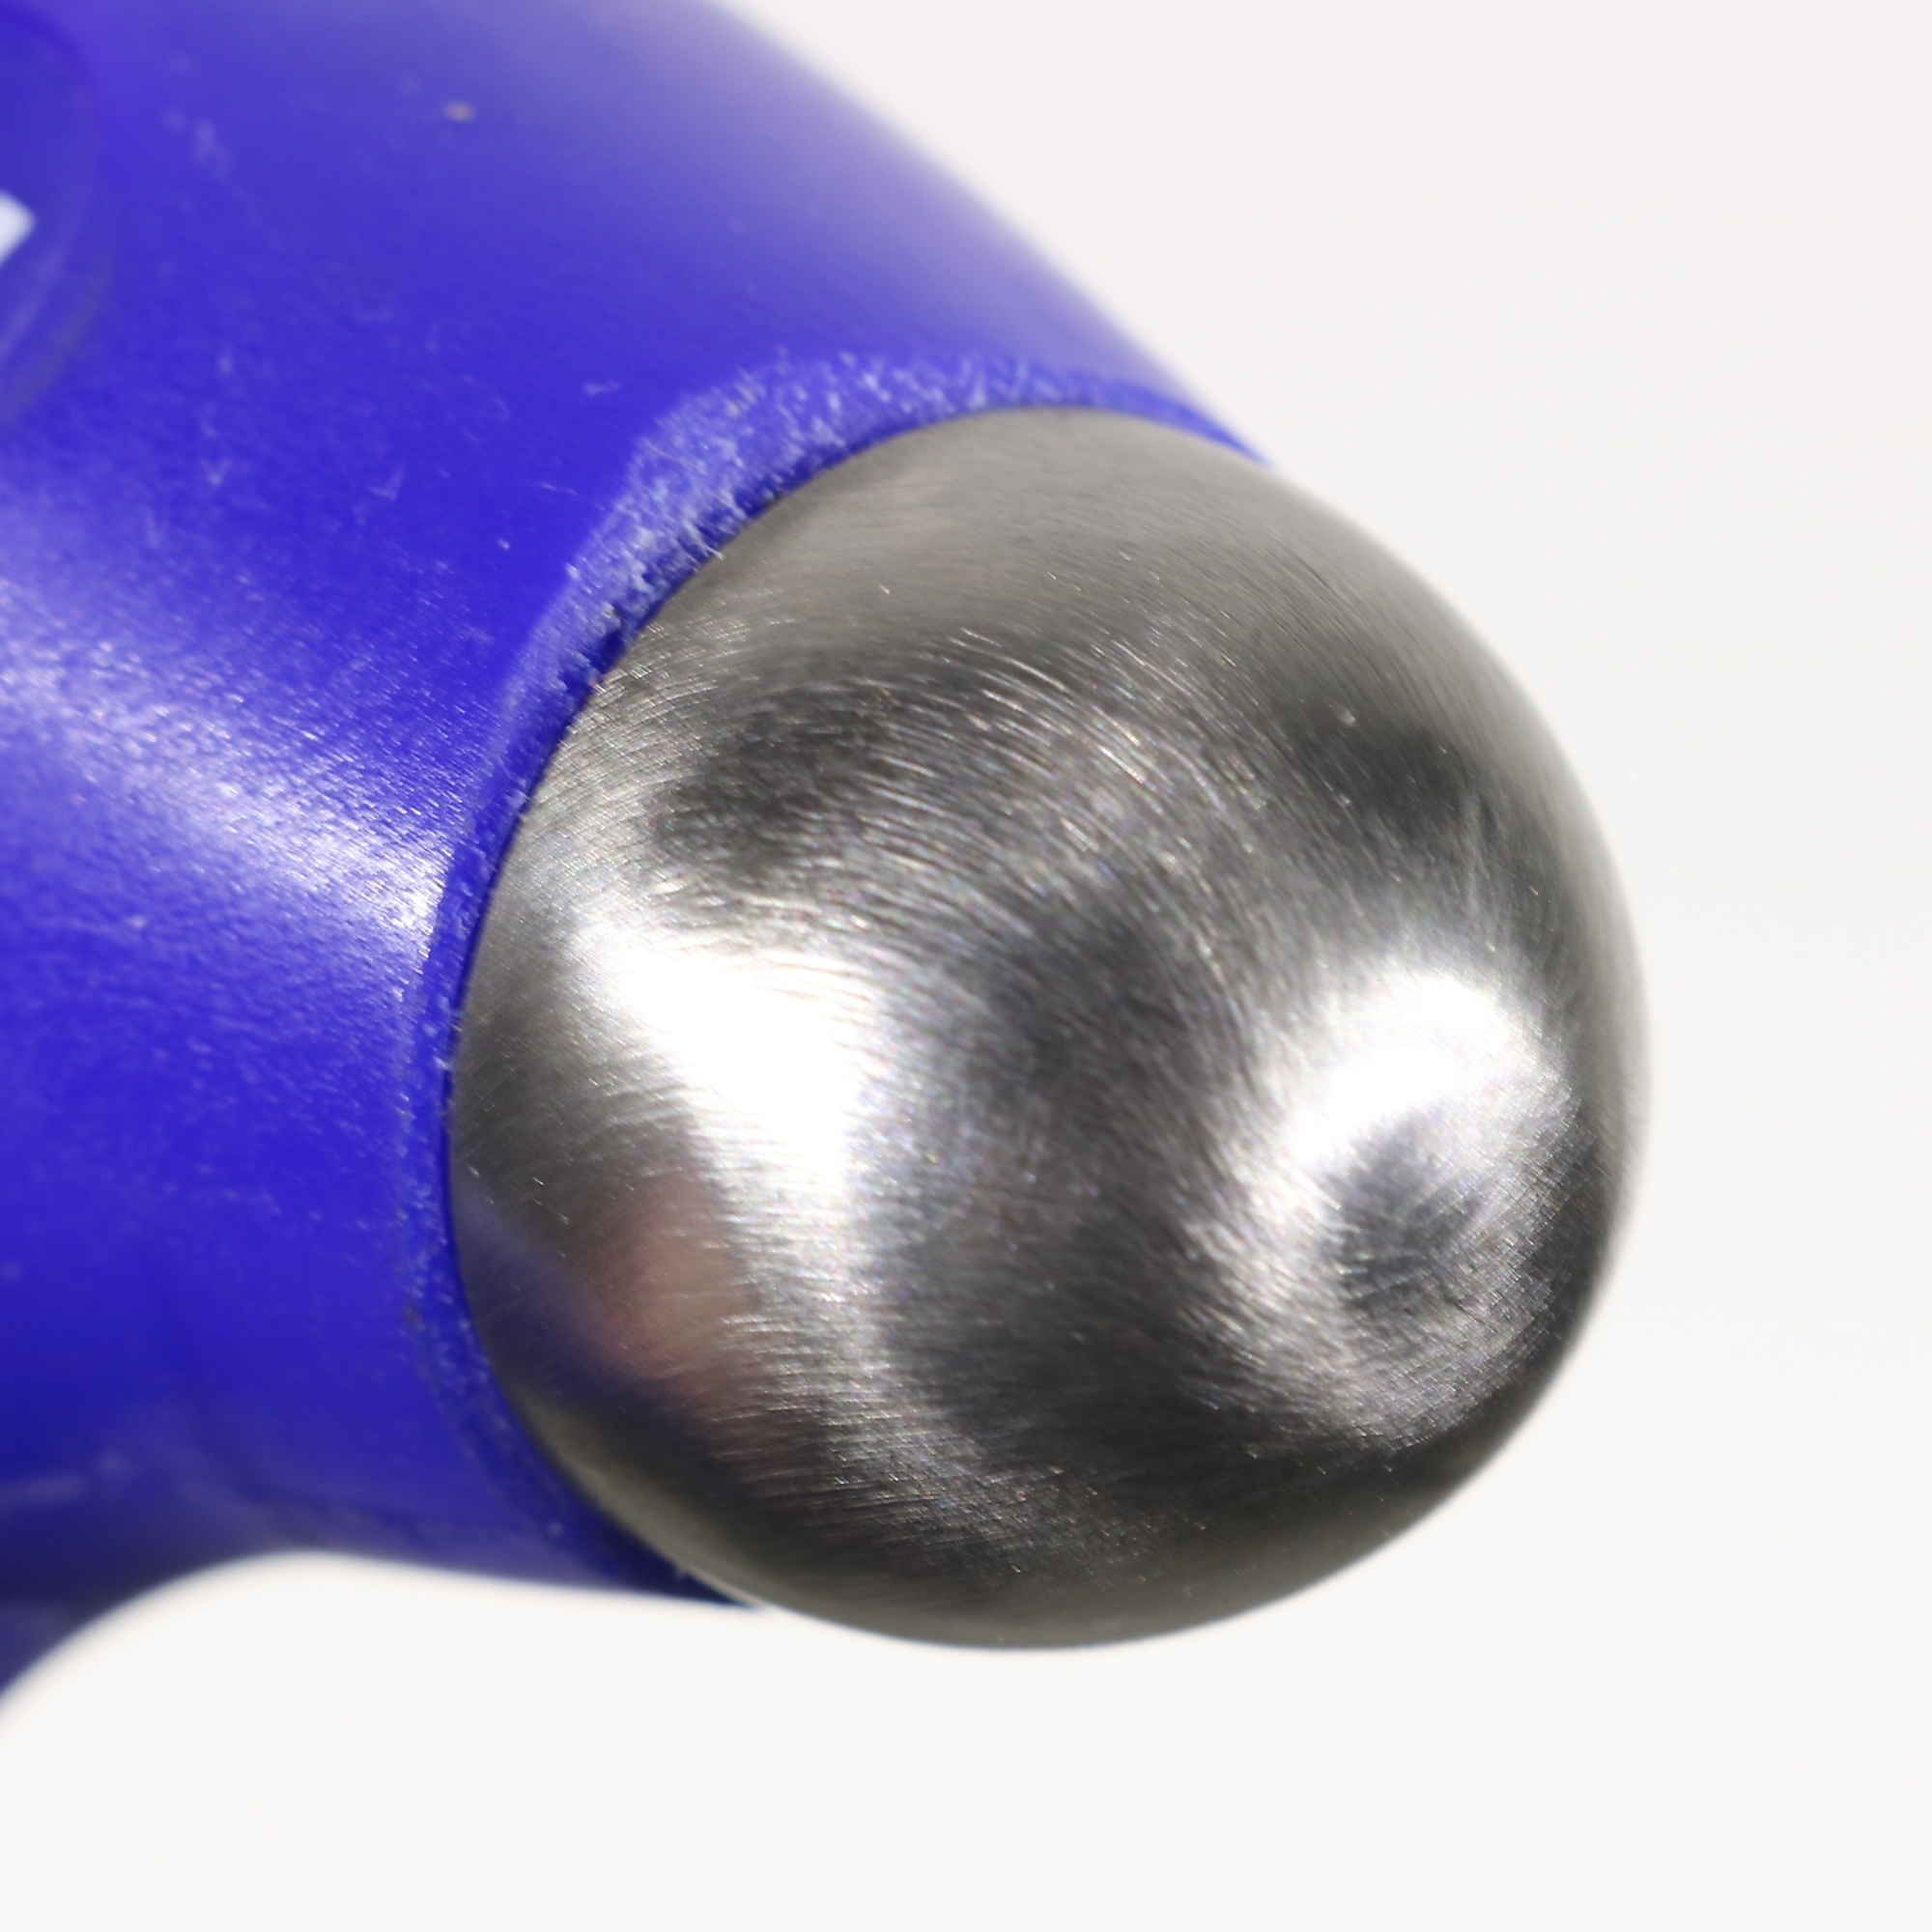 Baileigh, Ball Peen Hammer, Handle Length 12.75 in, Model 1018014